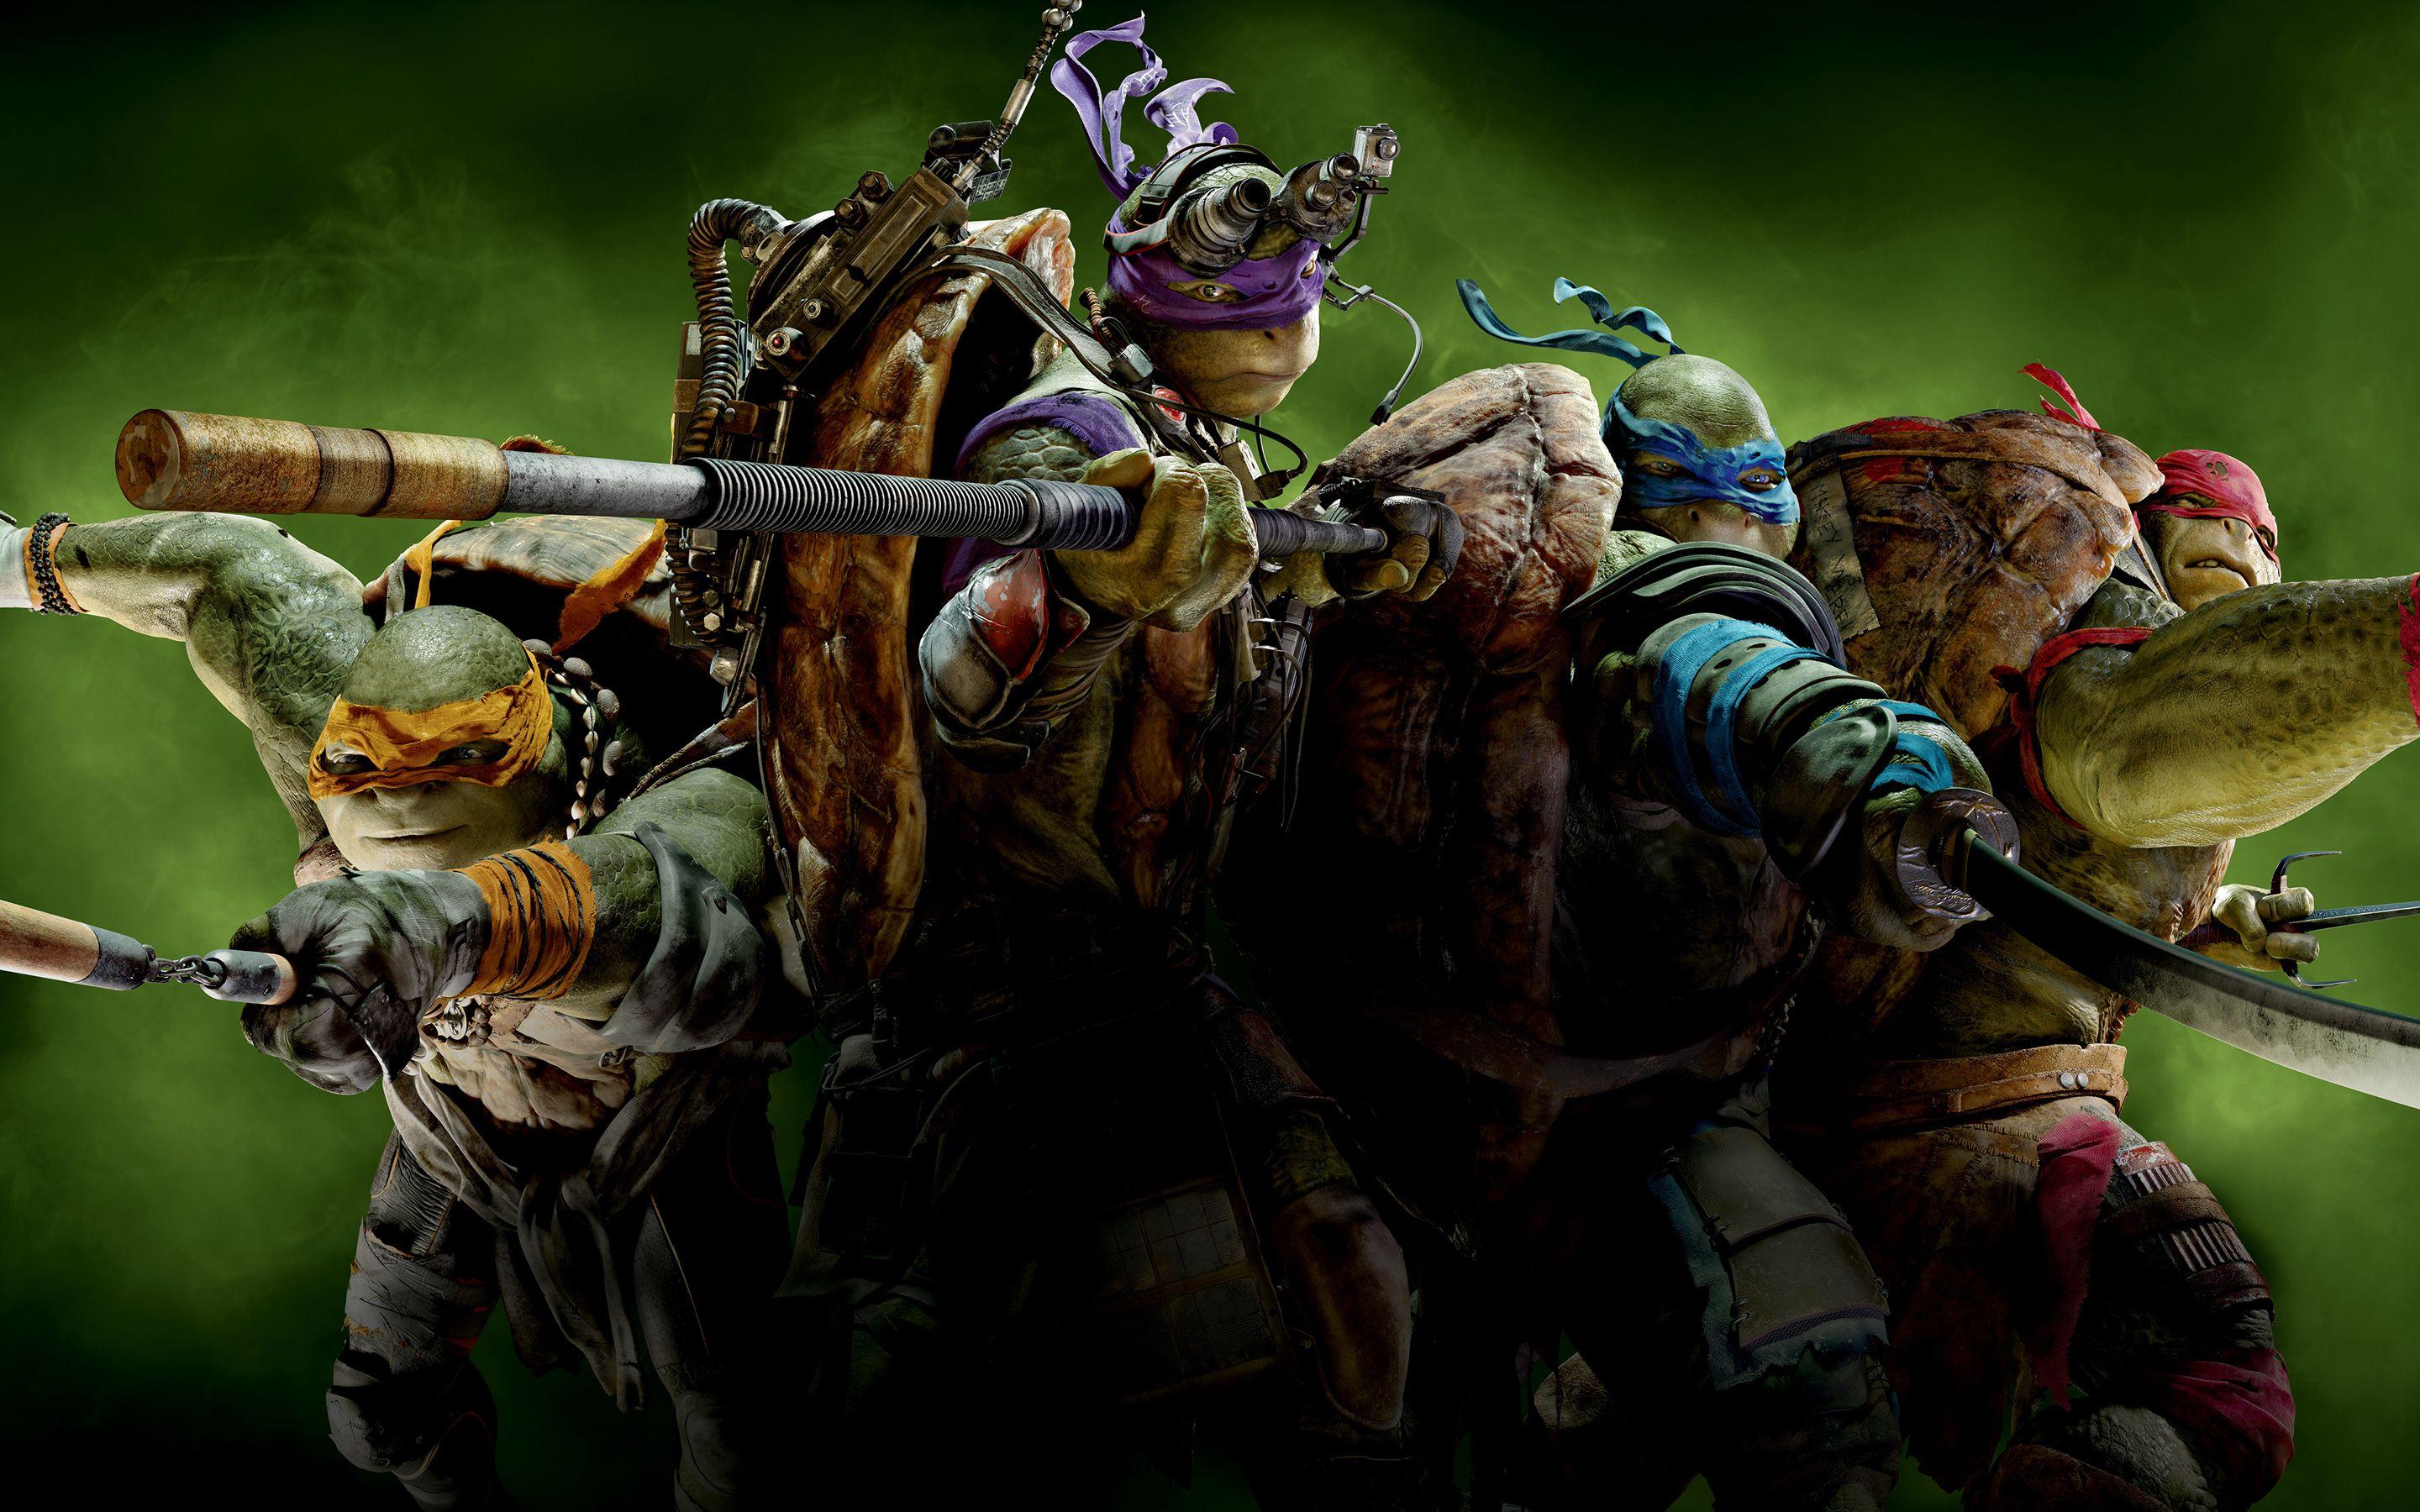 Teenage Mutant Ninja Turtles (2014) Full HD Wallpaper and Background